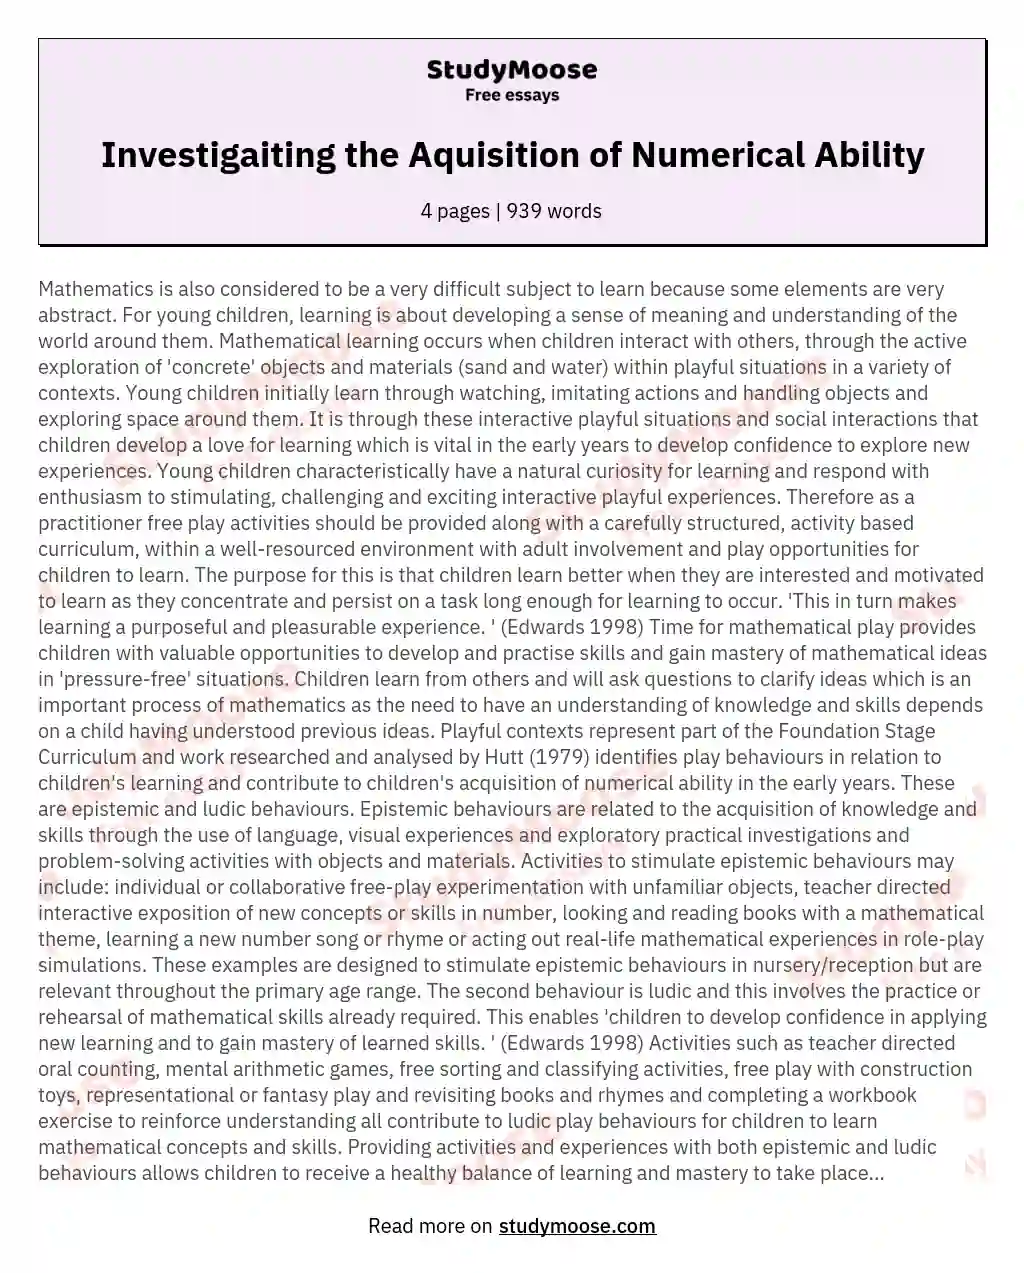 Investigaiting the Aquisition of Numerical Ability essay